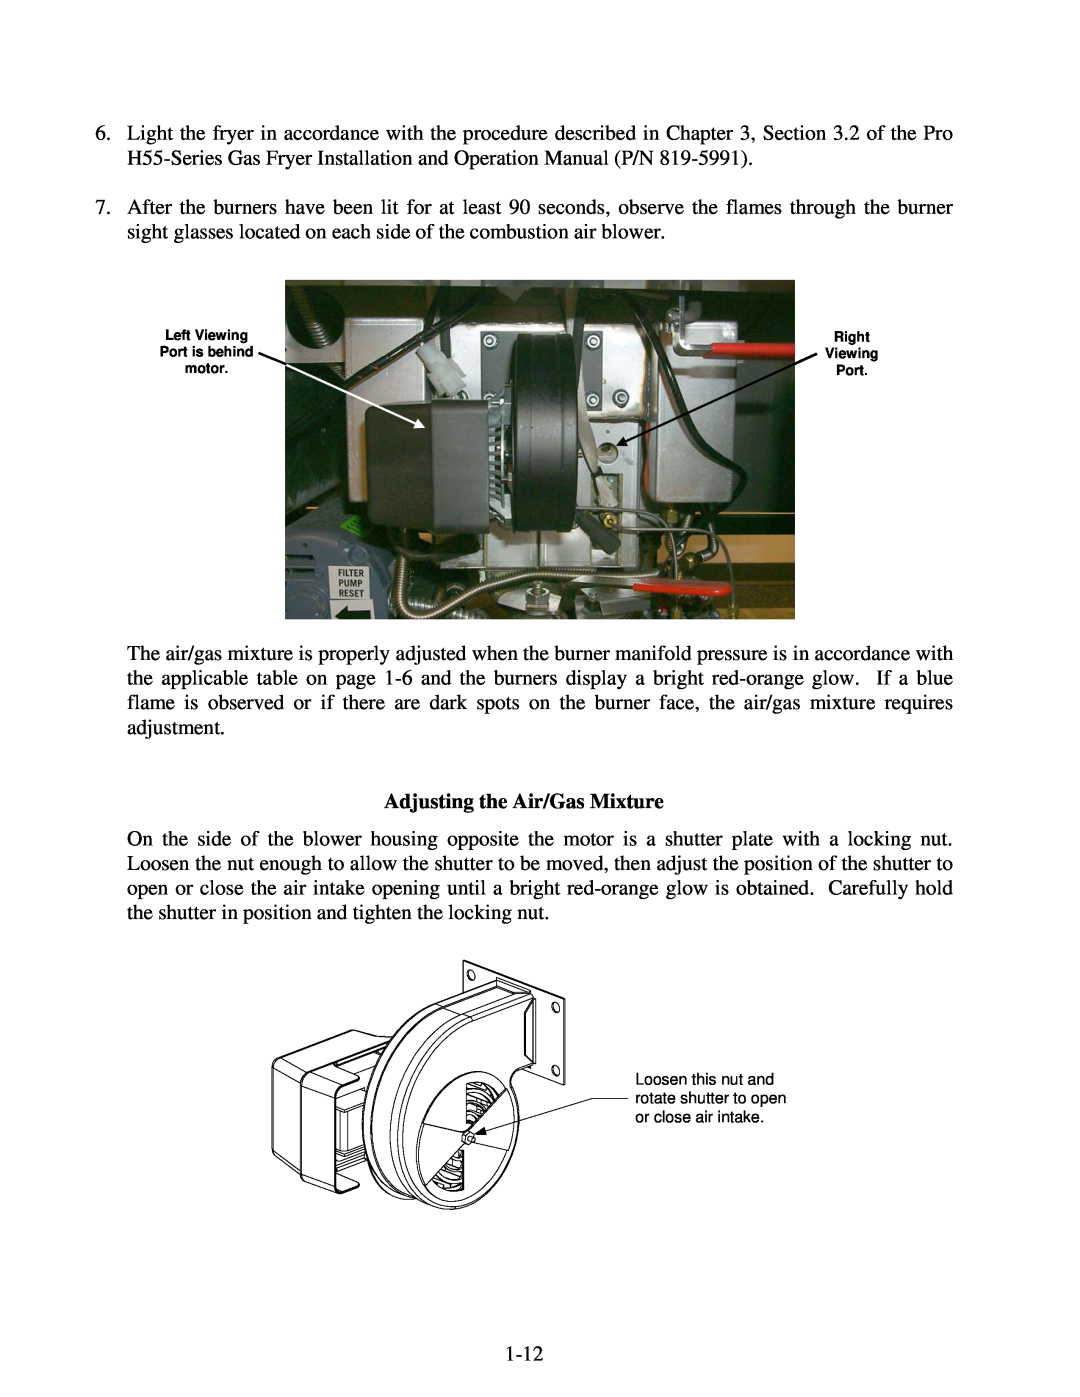 Frymaster H50 manual Adjusting the Air/Gas Mixture 